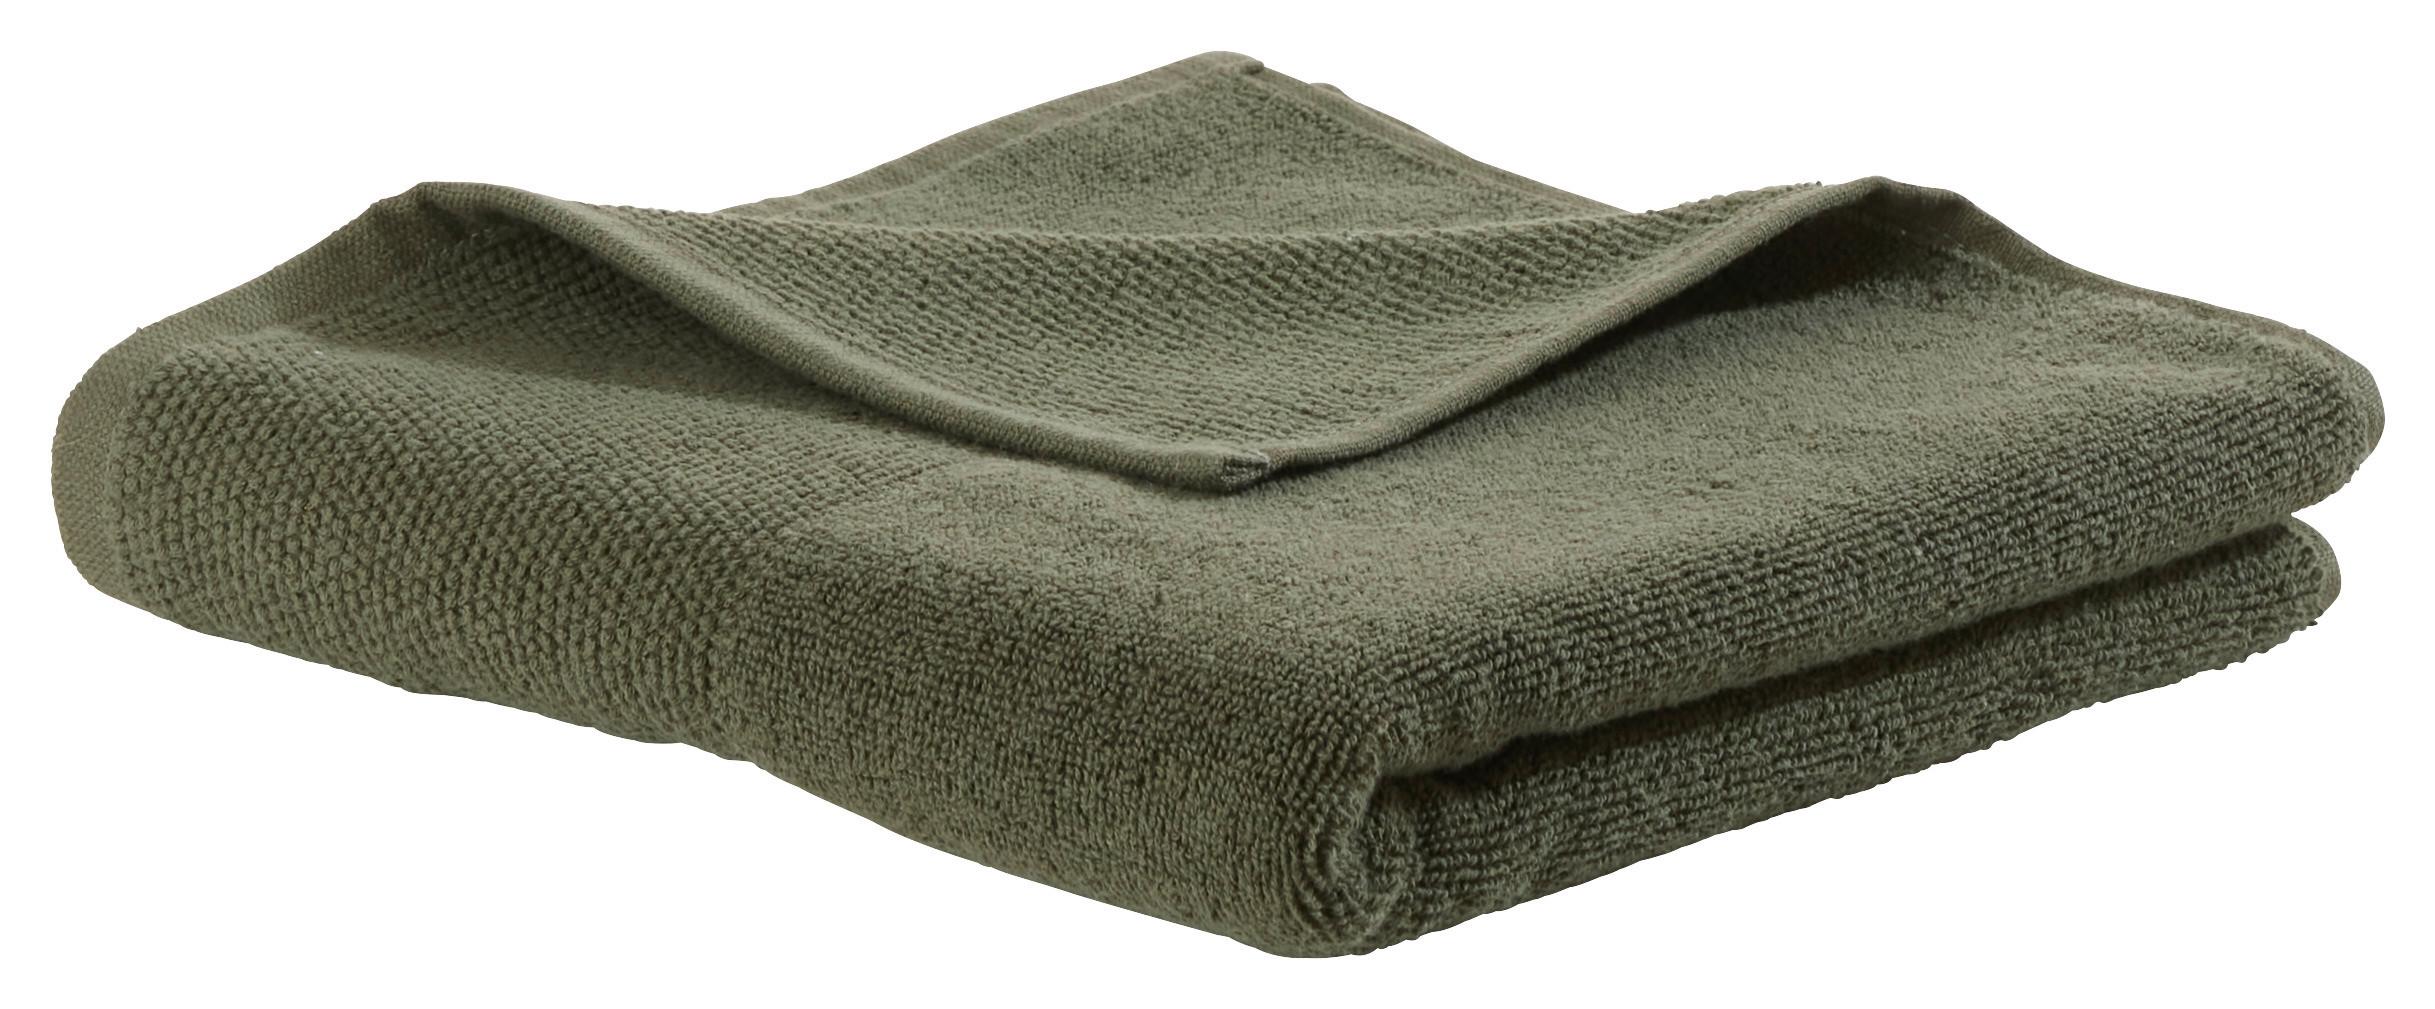 Brisača Olivia - zelena, Konvencionalno, tekstil (50/100cm) - Premium Living